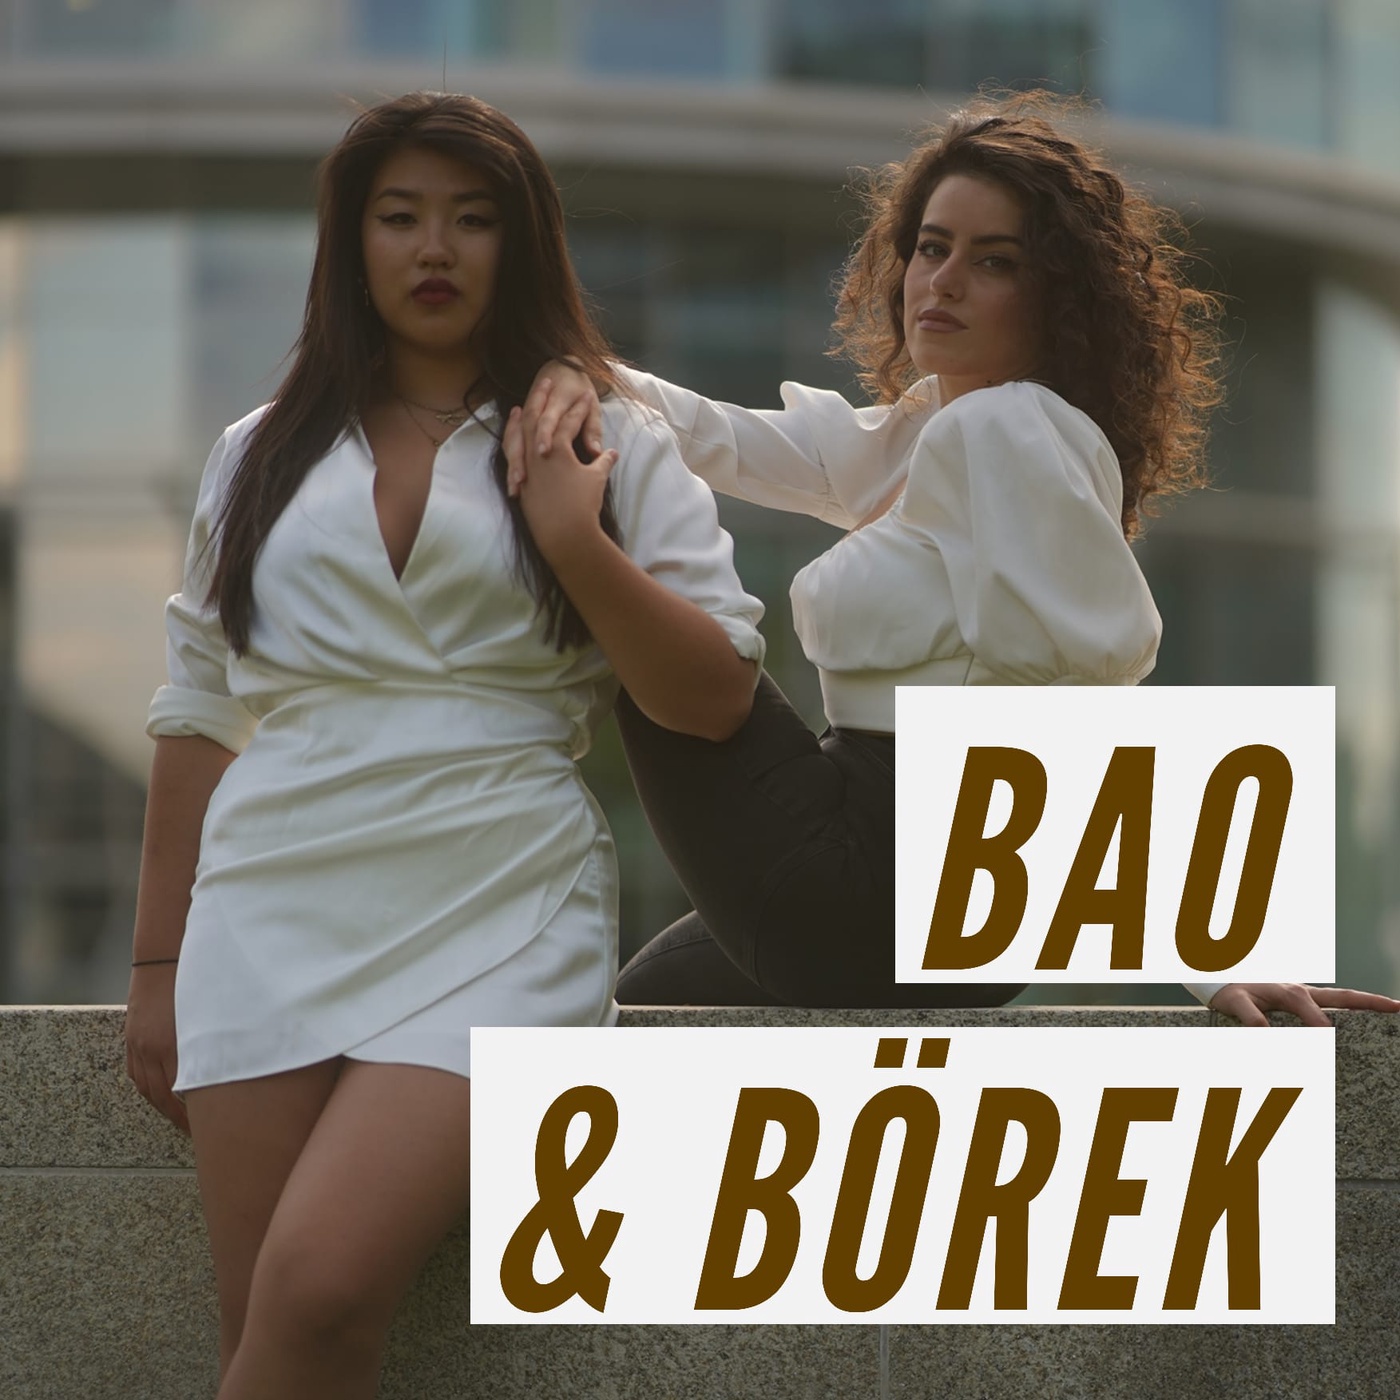 Bao und Boerek